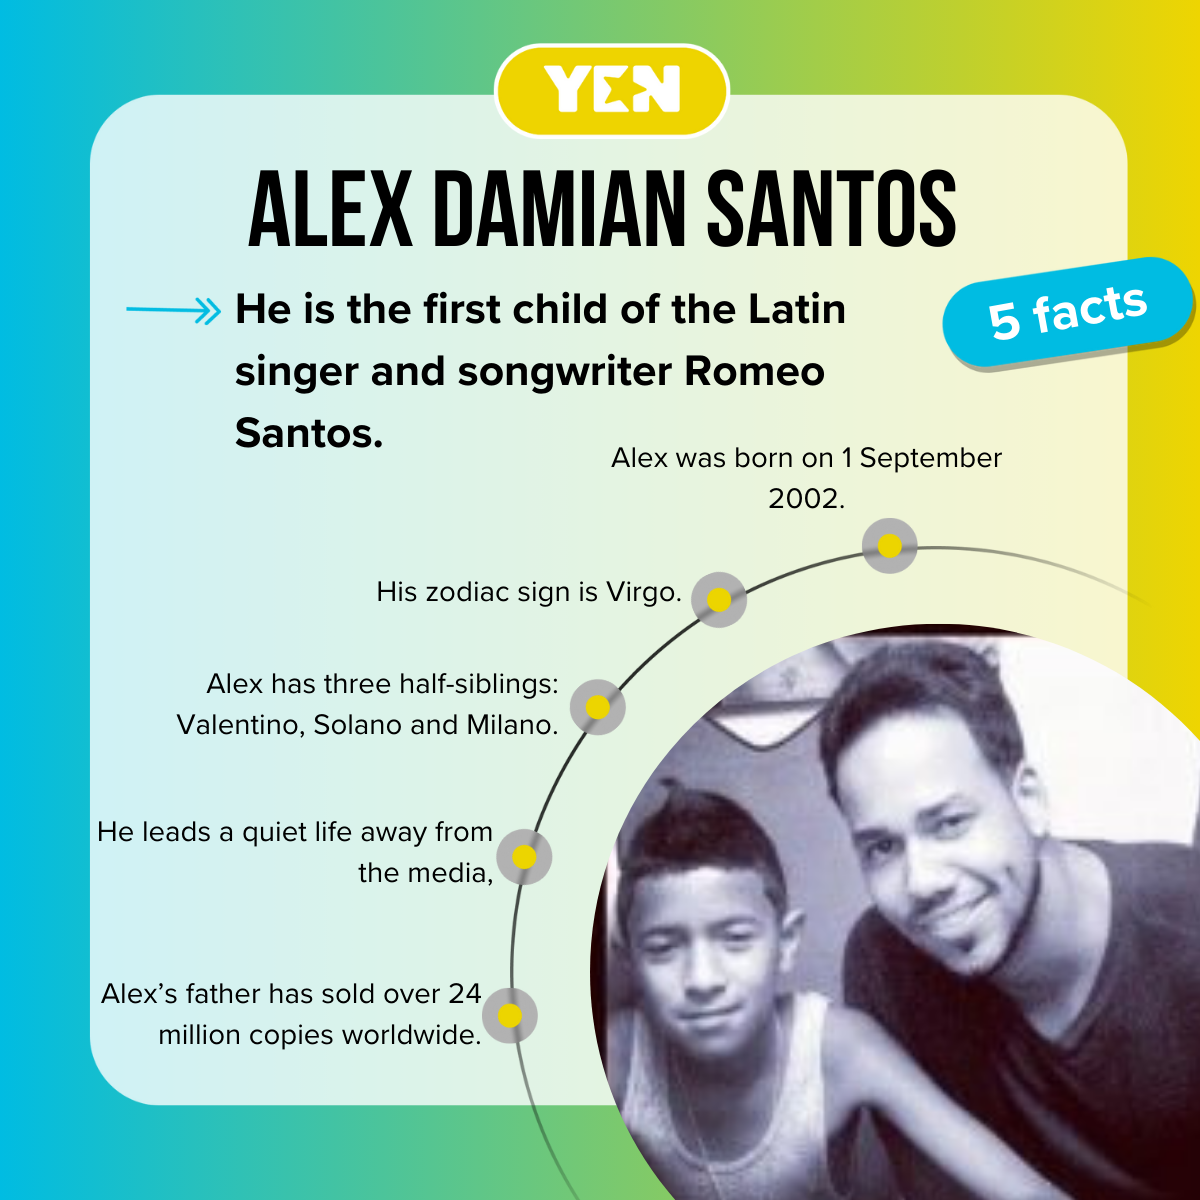 5 facts about Alex Damian Santos